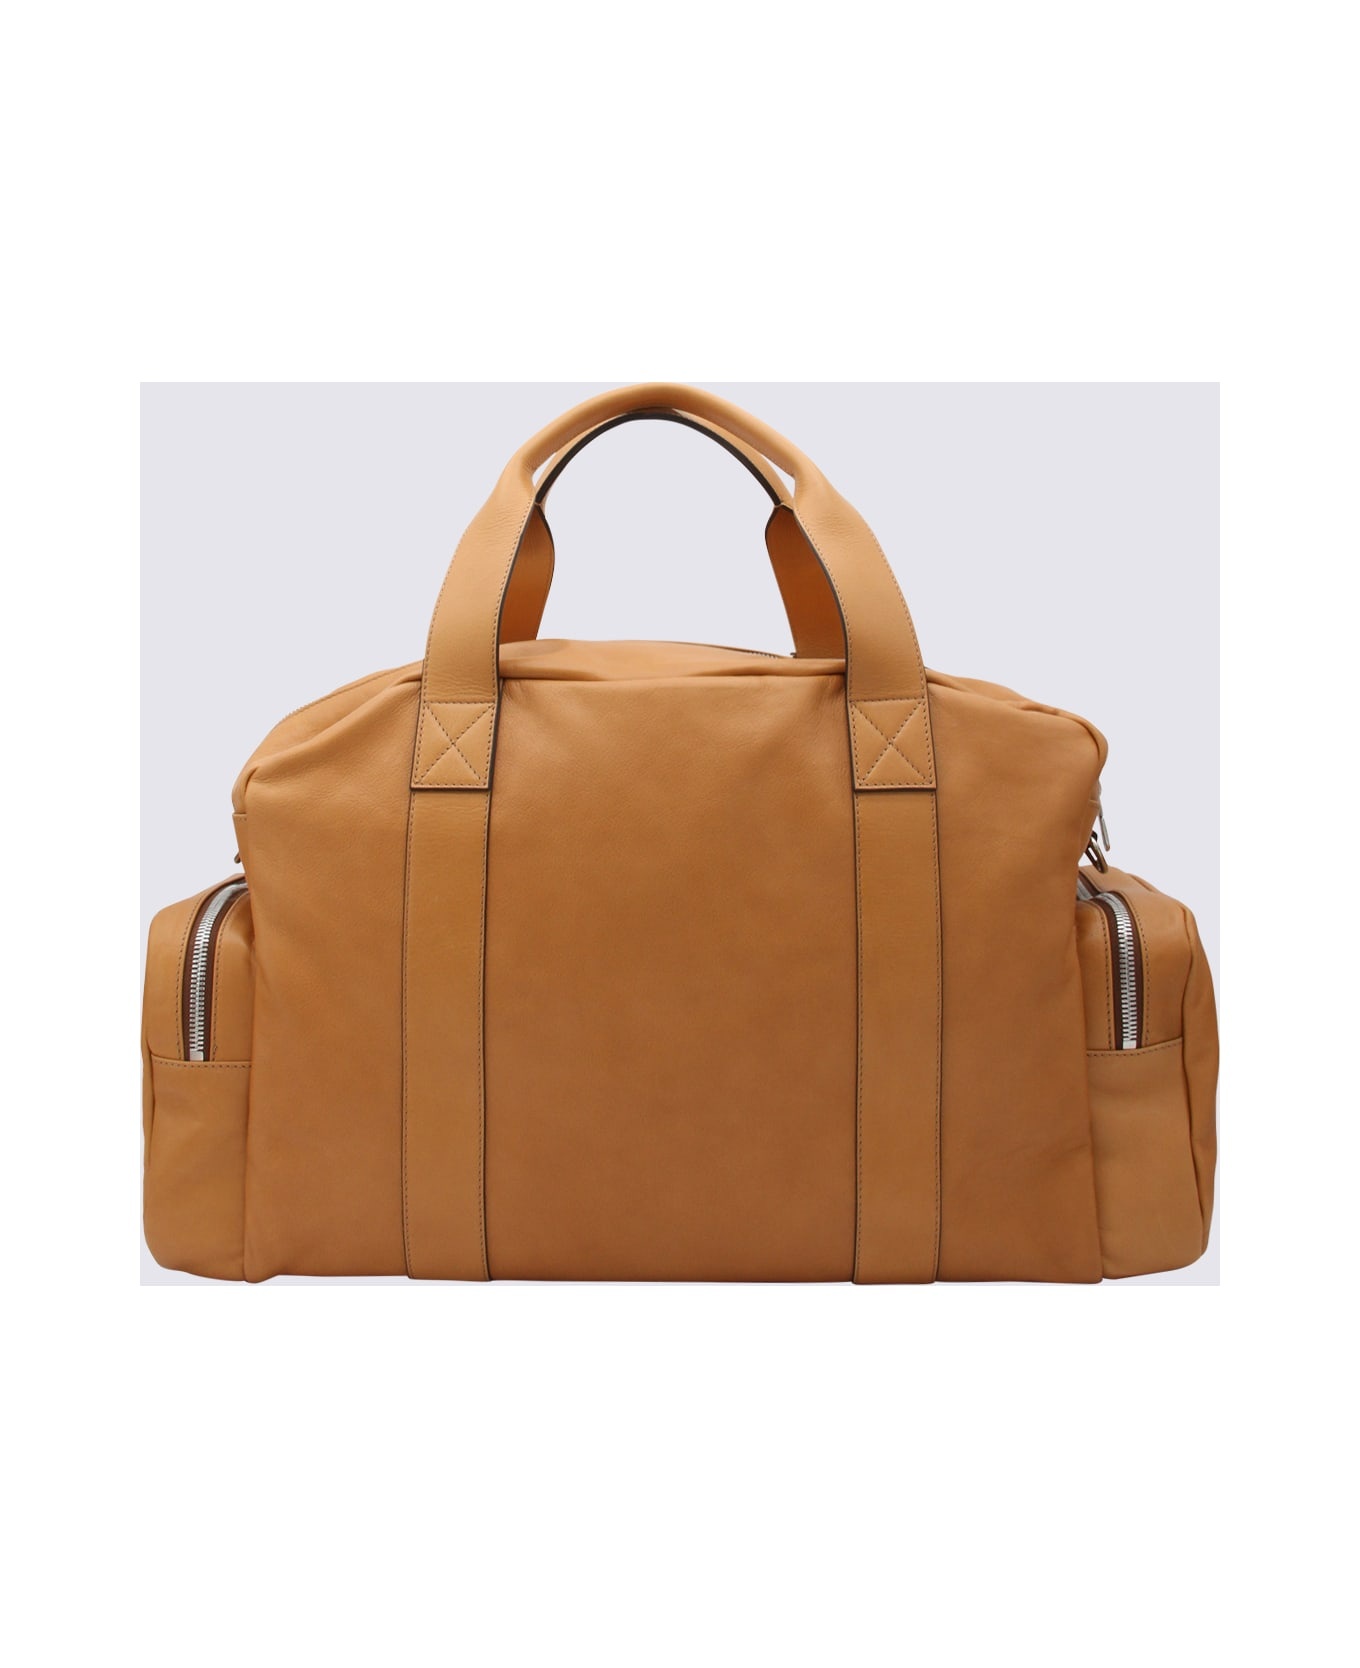 Beige Leather Leisure Bag - 2